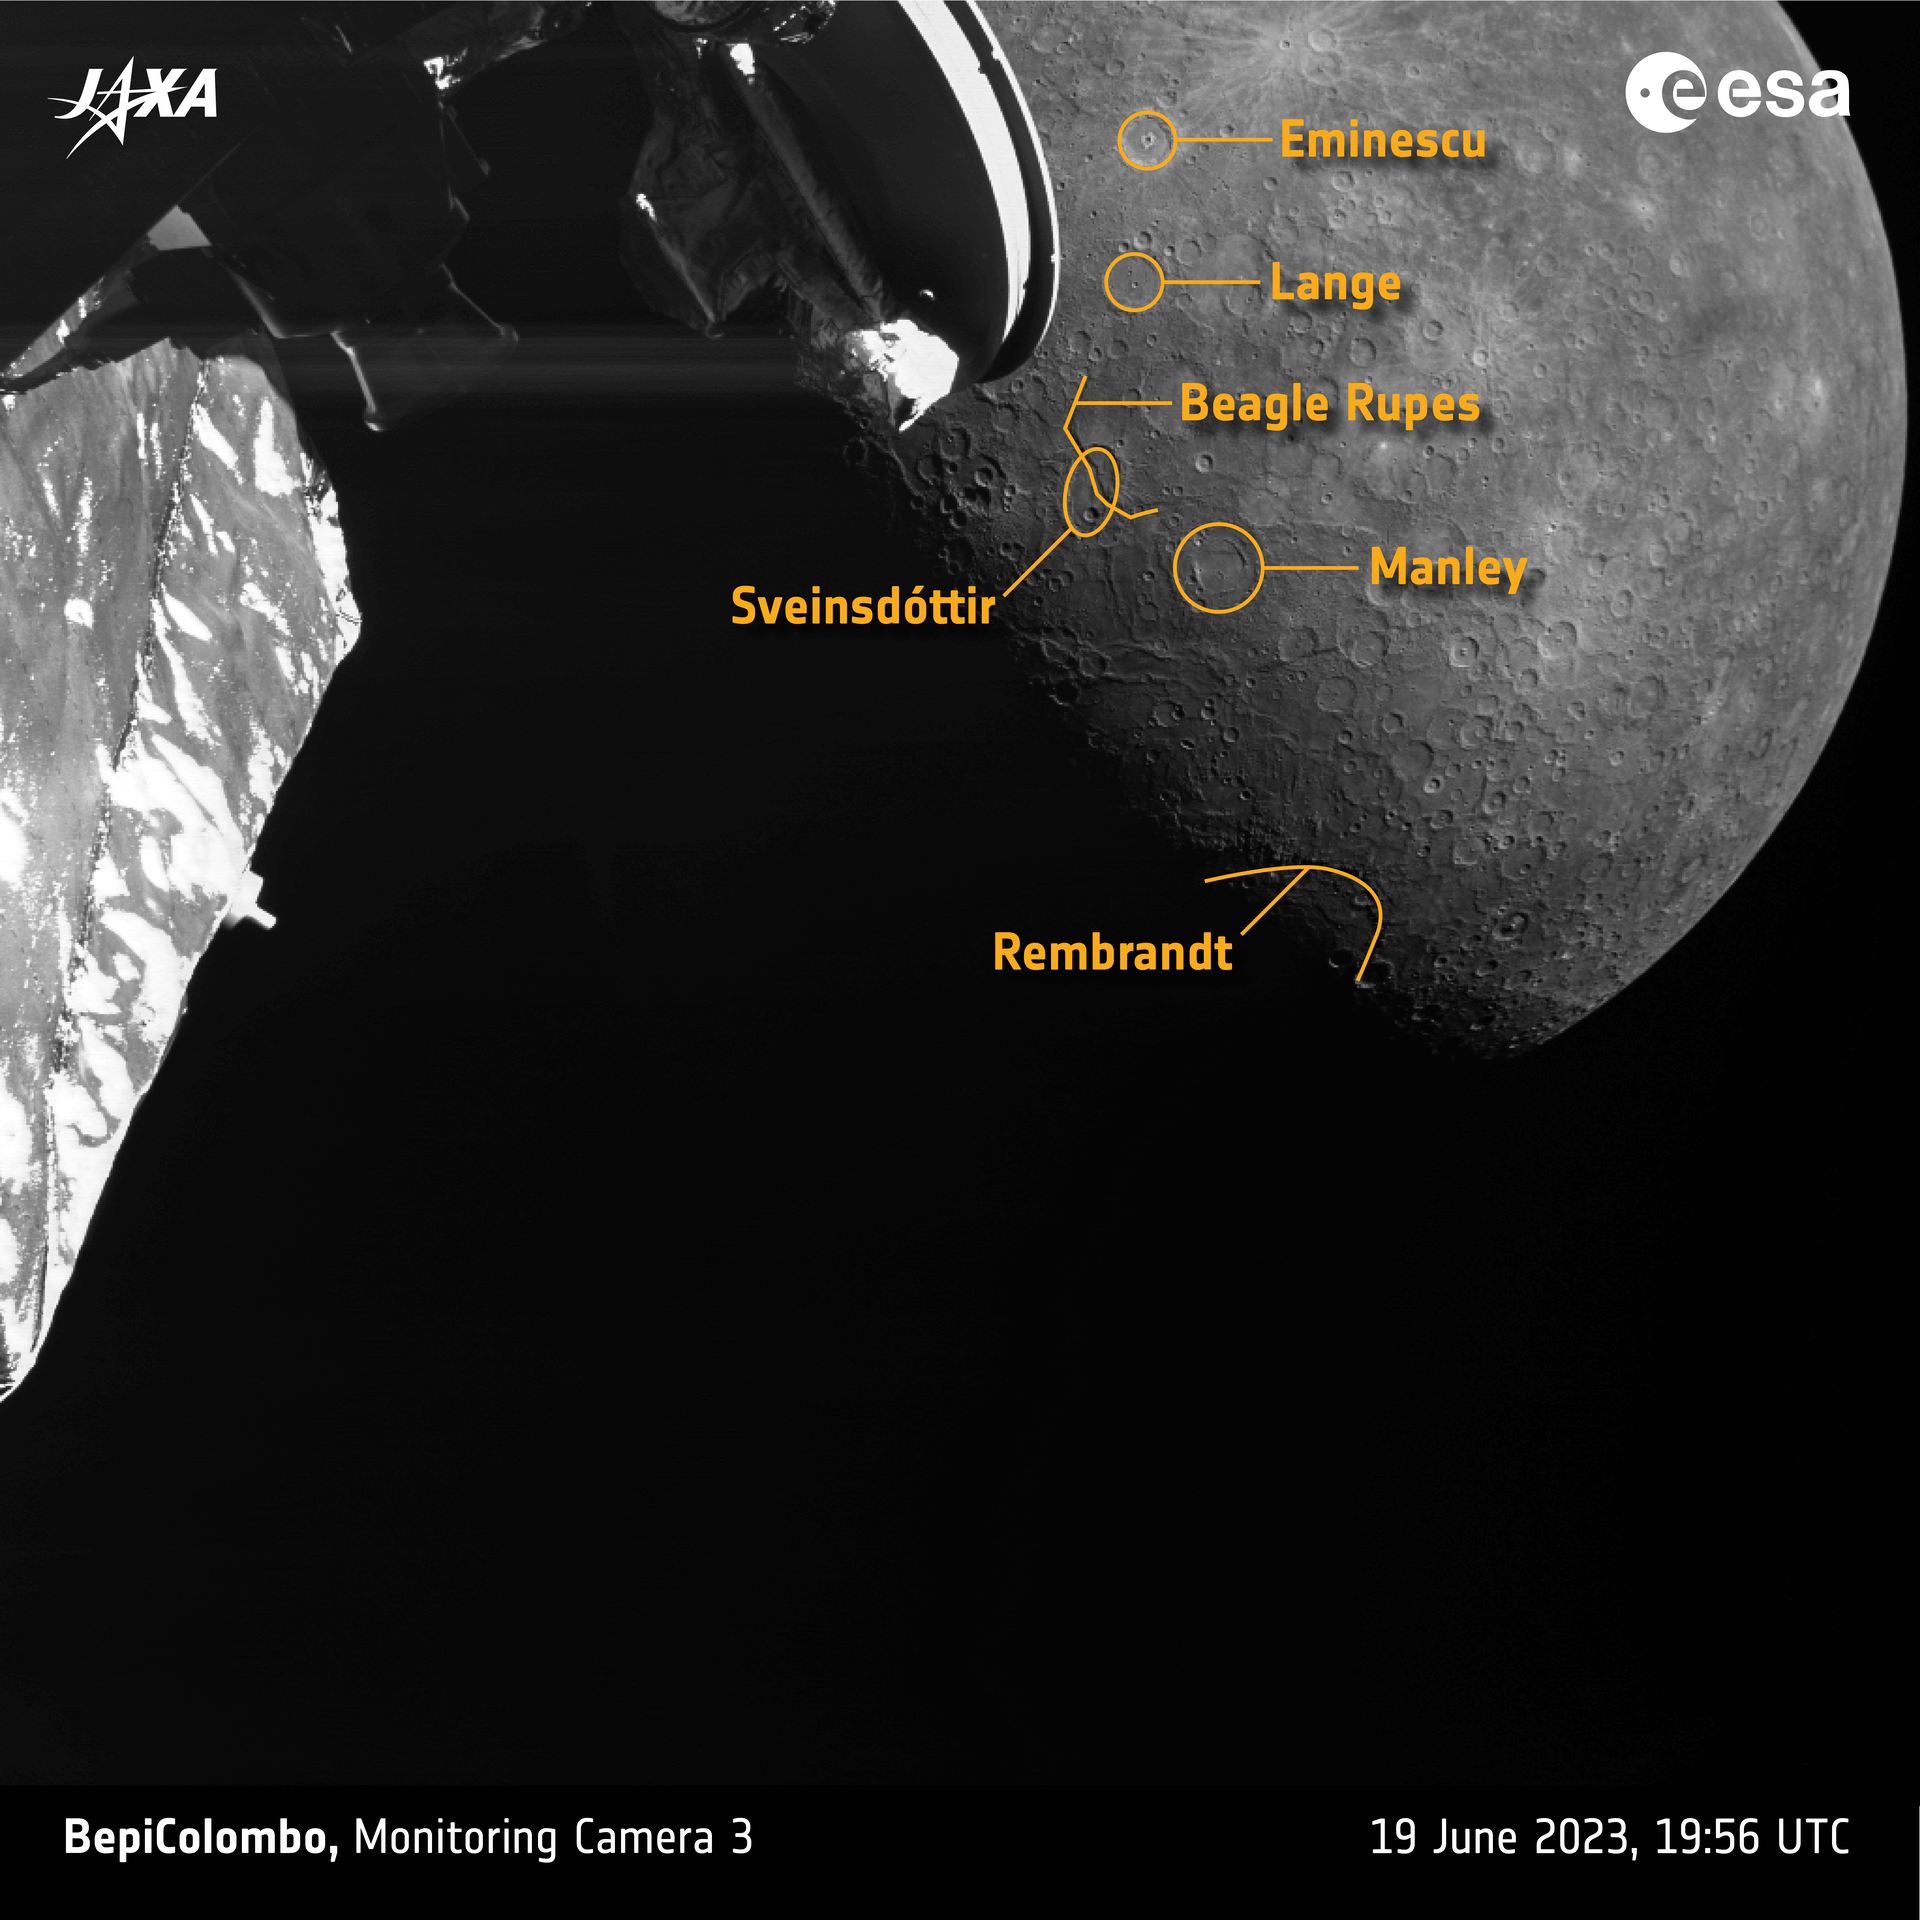 Images of Mercury